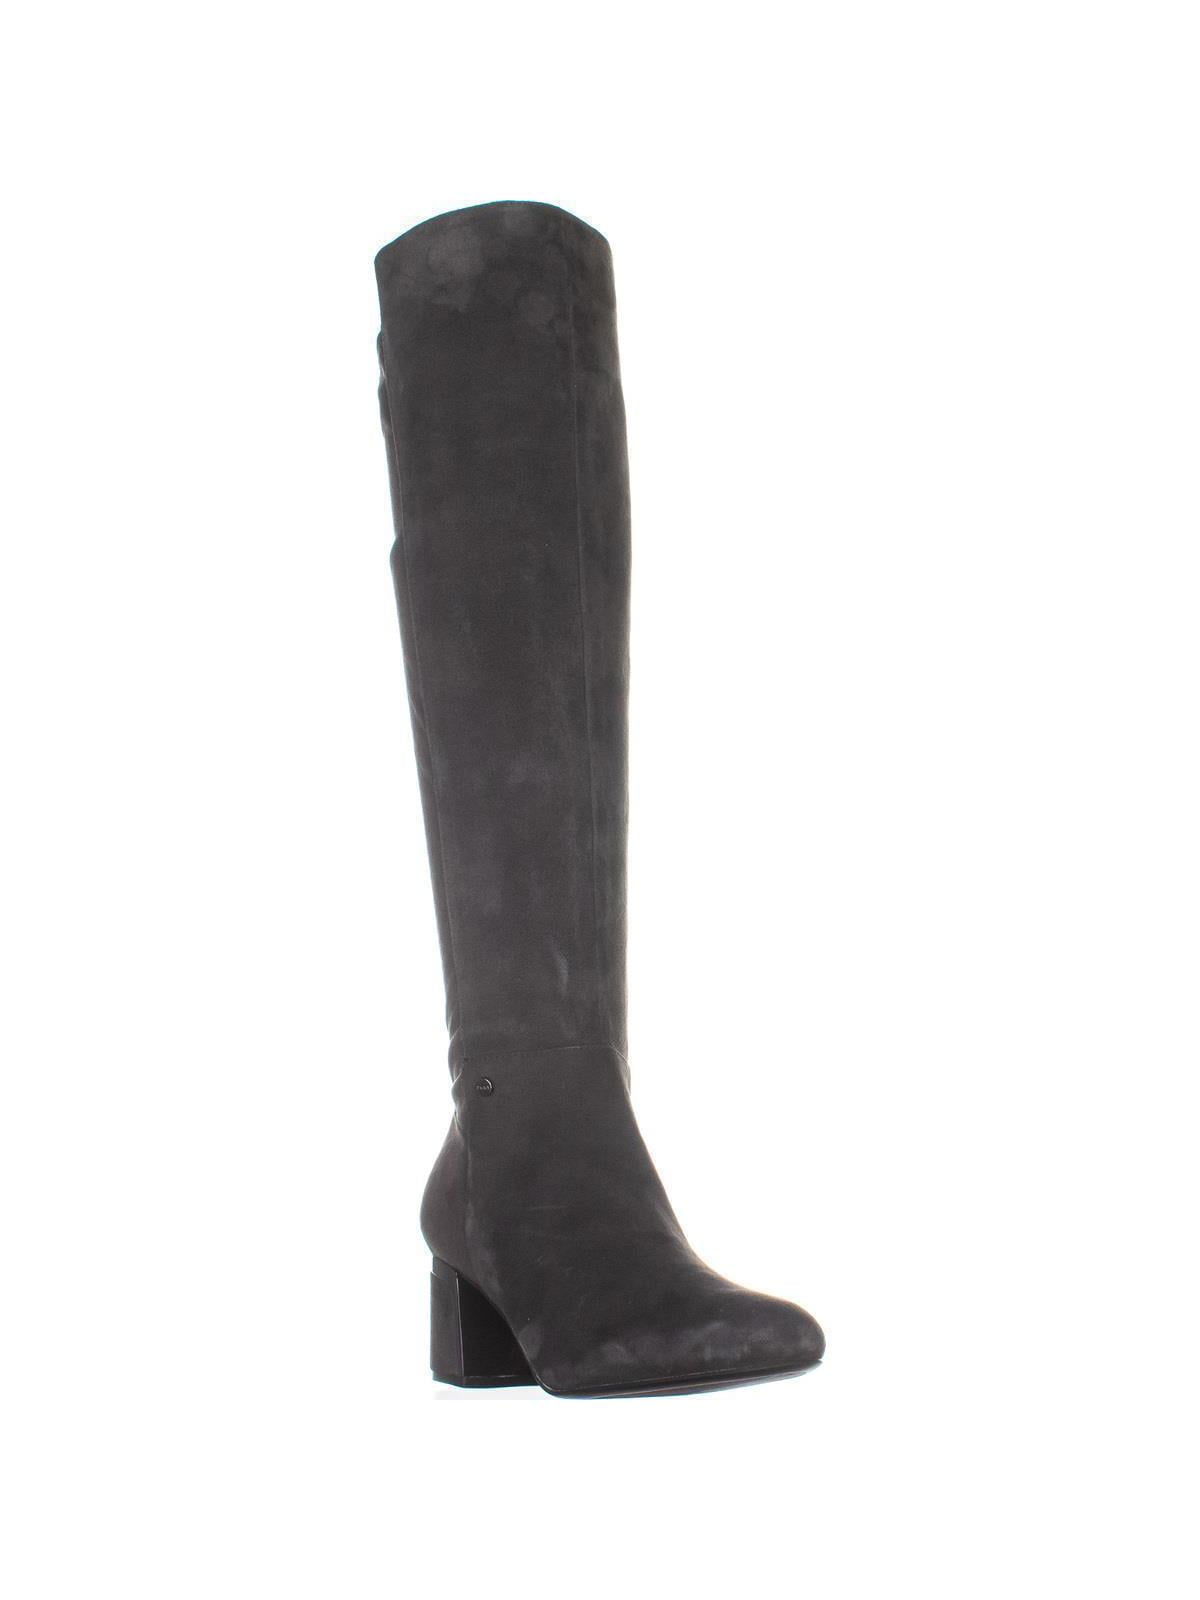 Womens DKNY Cora Knee High Boots, Dark Gray Suede - Walmart.com